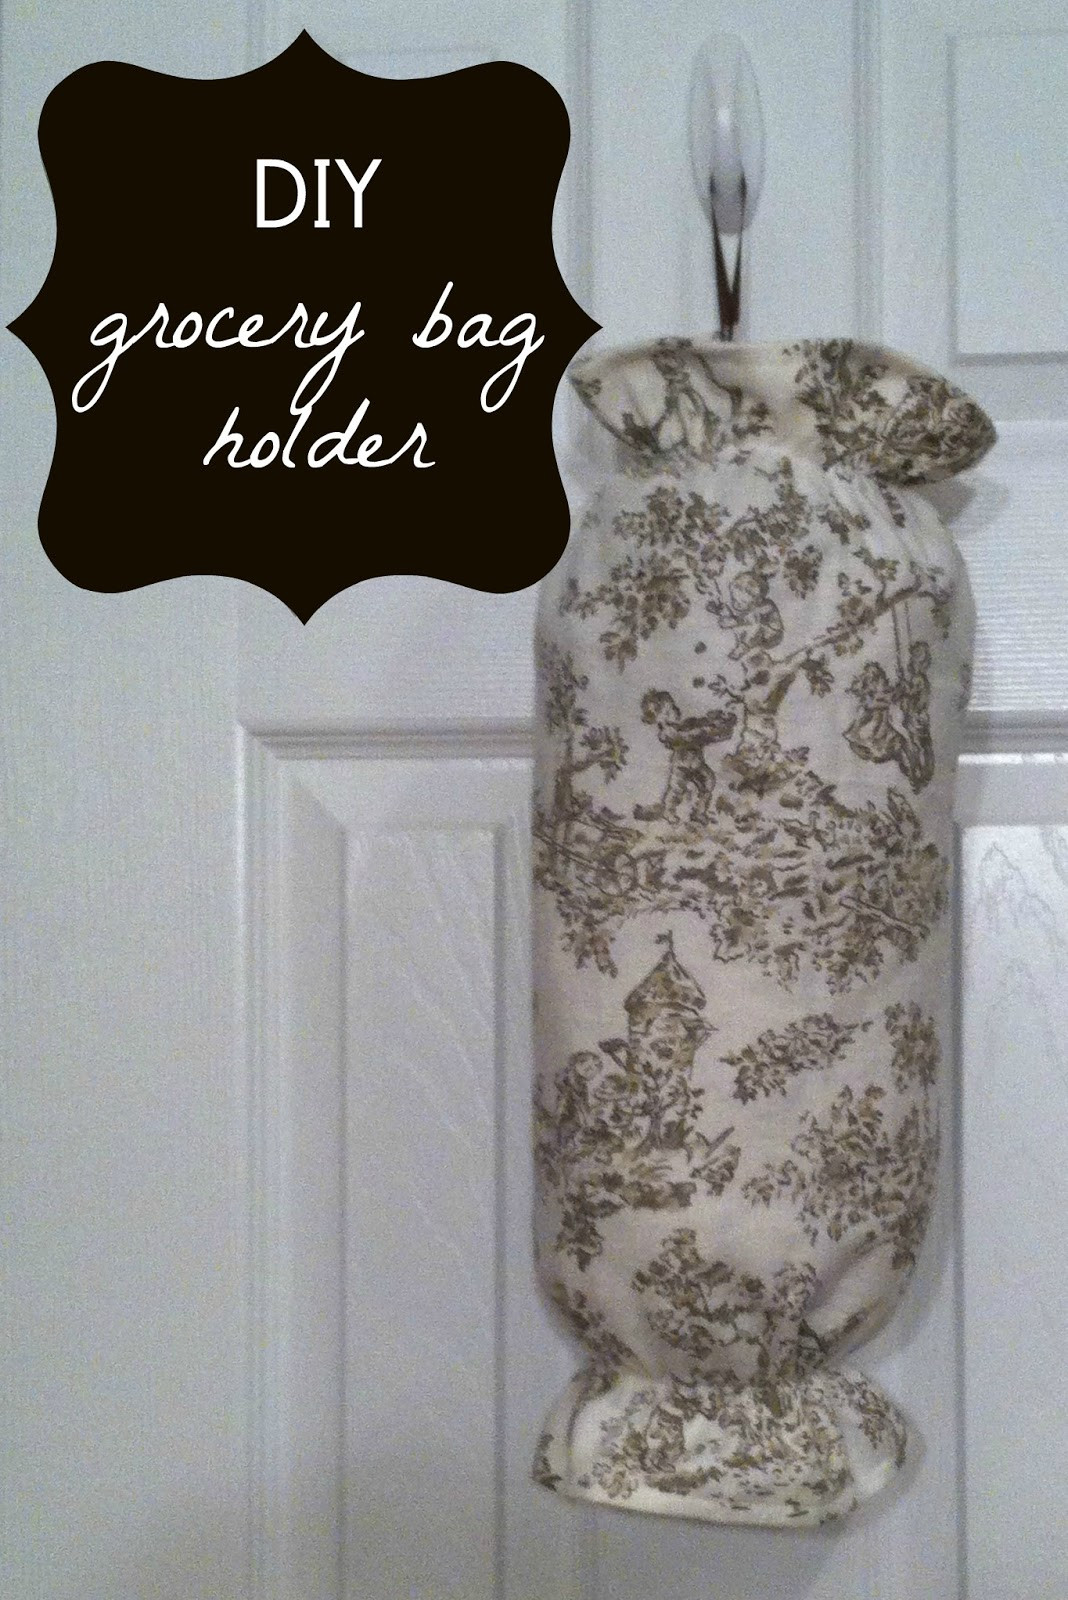 Plastic Bag Organizer DIY
 Notes from Kristen Grocery Bag Holder DIY